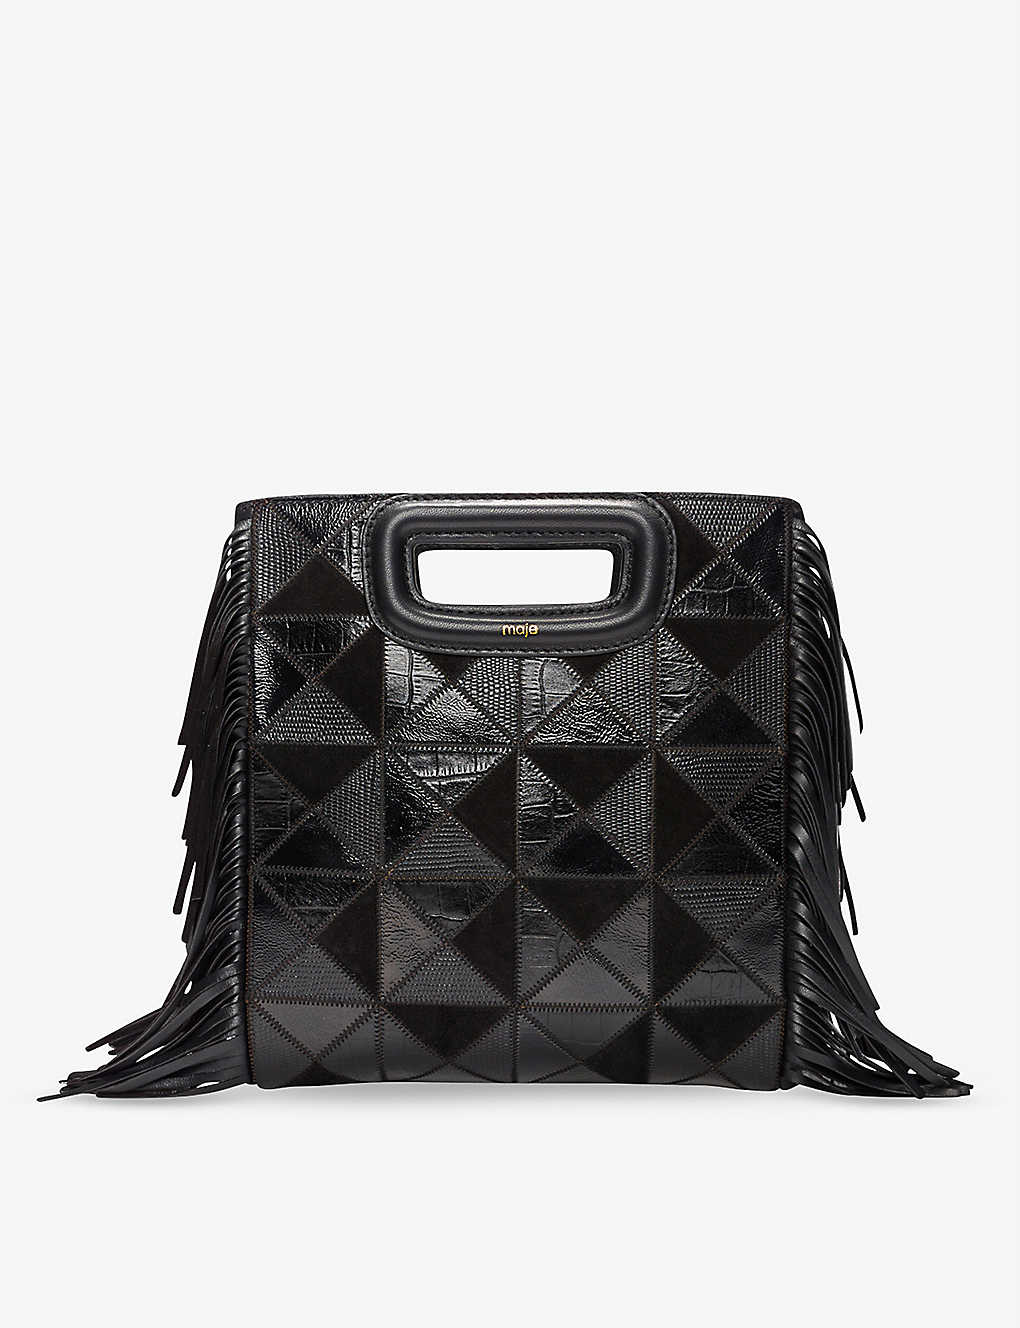 M patchwork leather and suede shoulder bag(9403500)